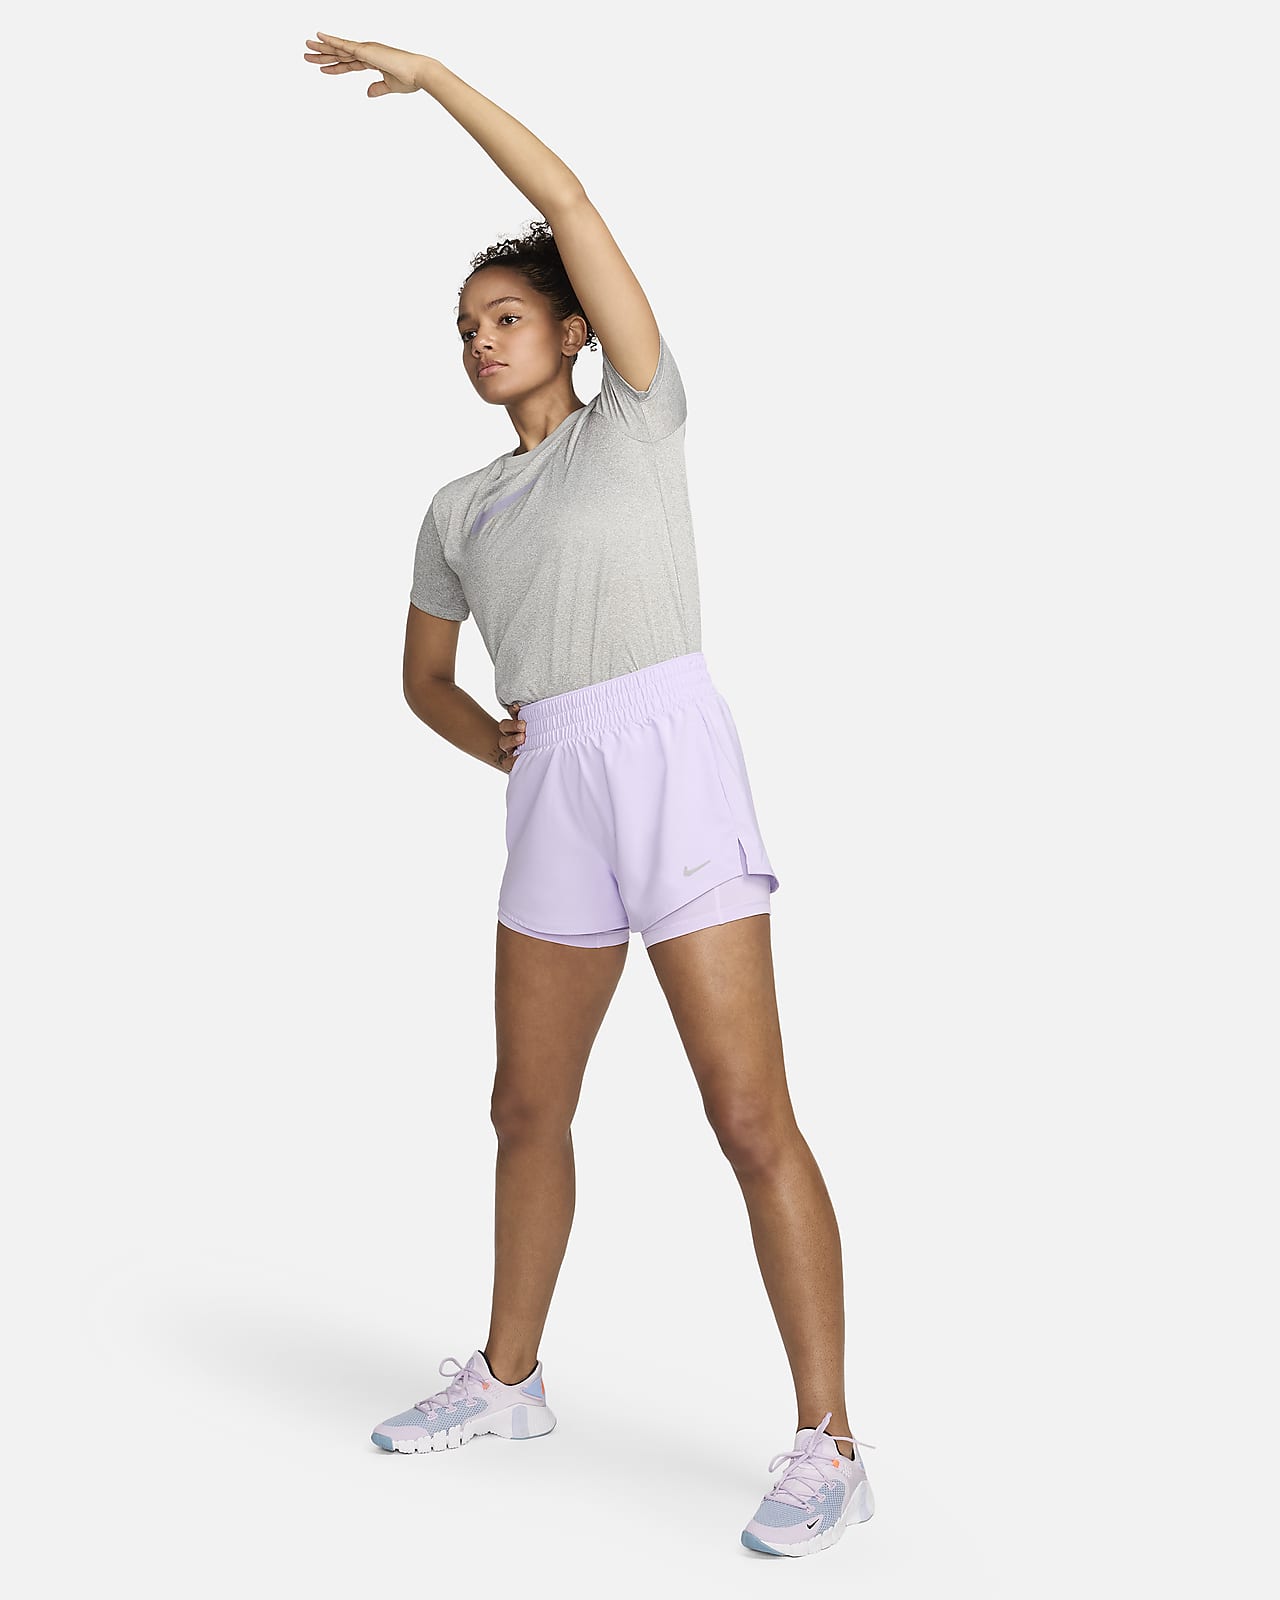 Nike Dri-FIT One High-Rise 3 Shorts - Women's